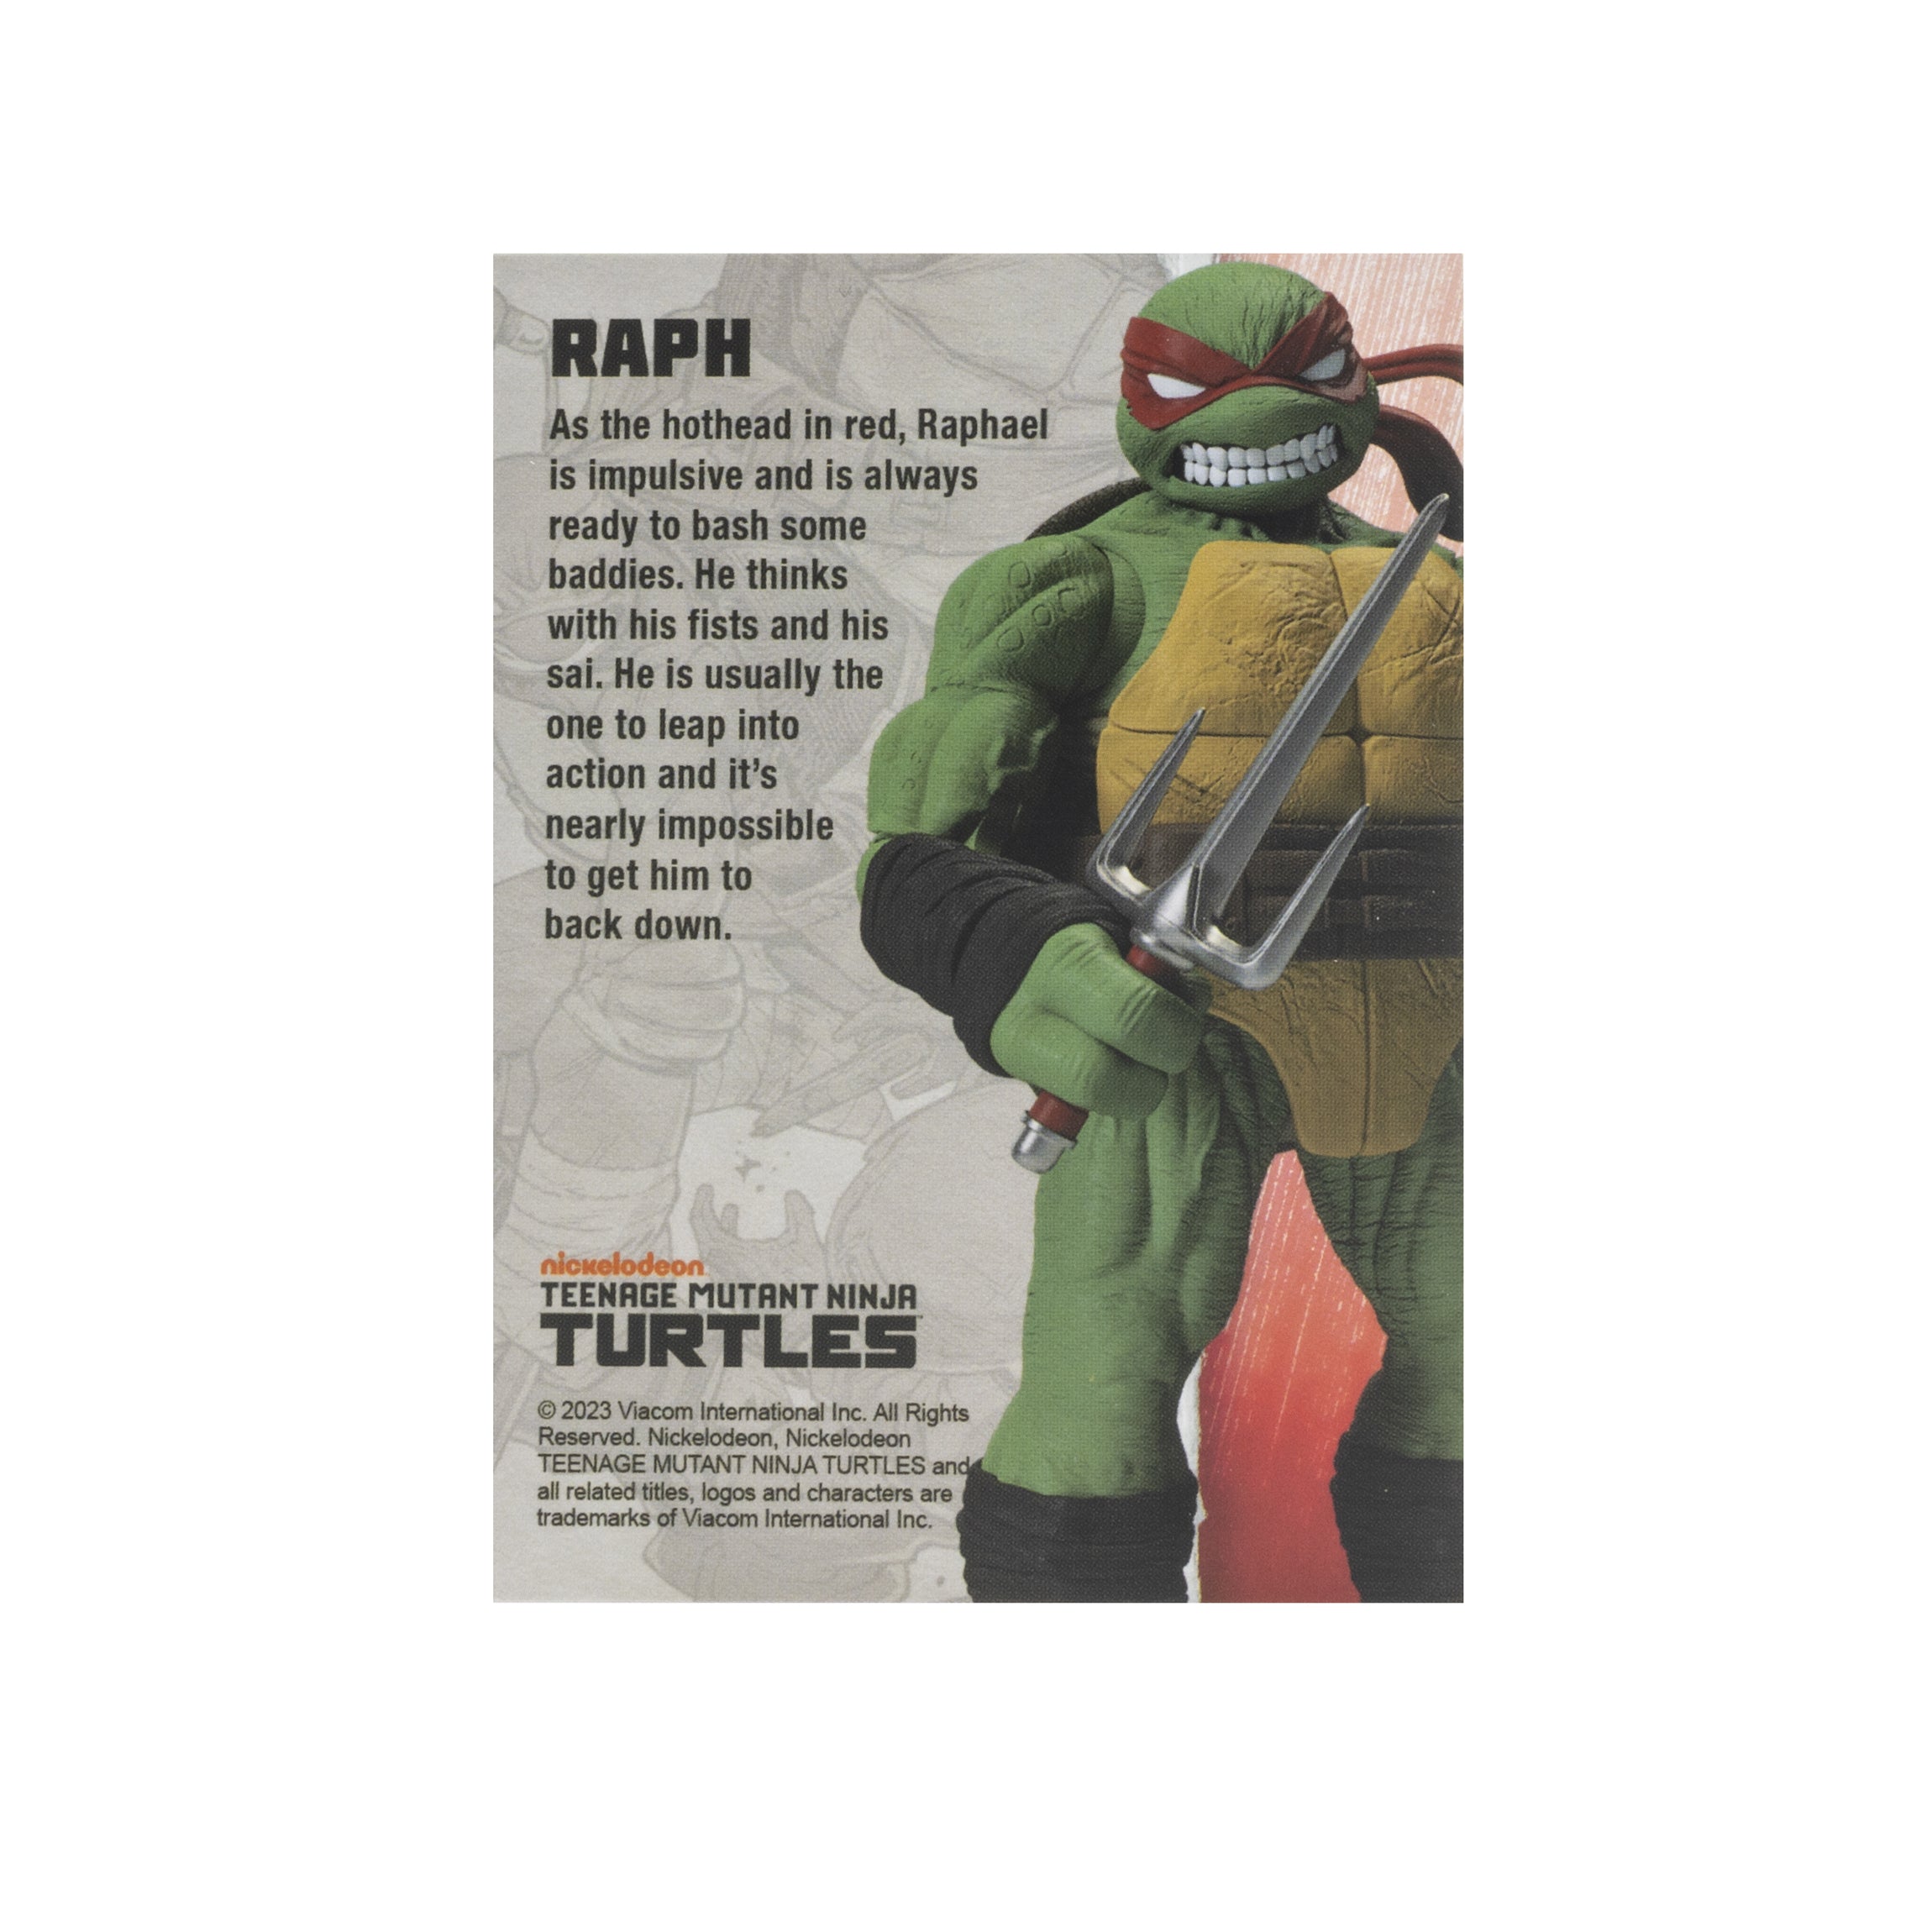 The Teenage Mutant Ninja Turtles will always be relevant